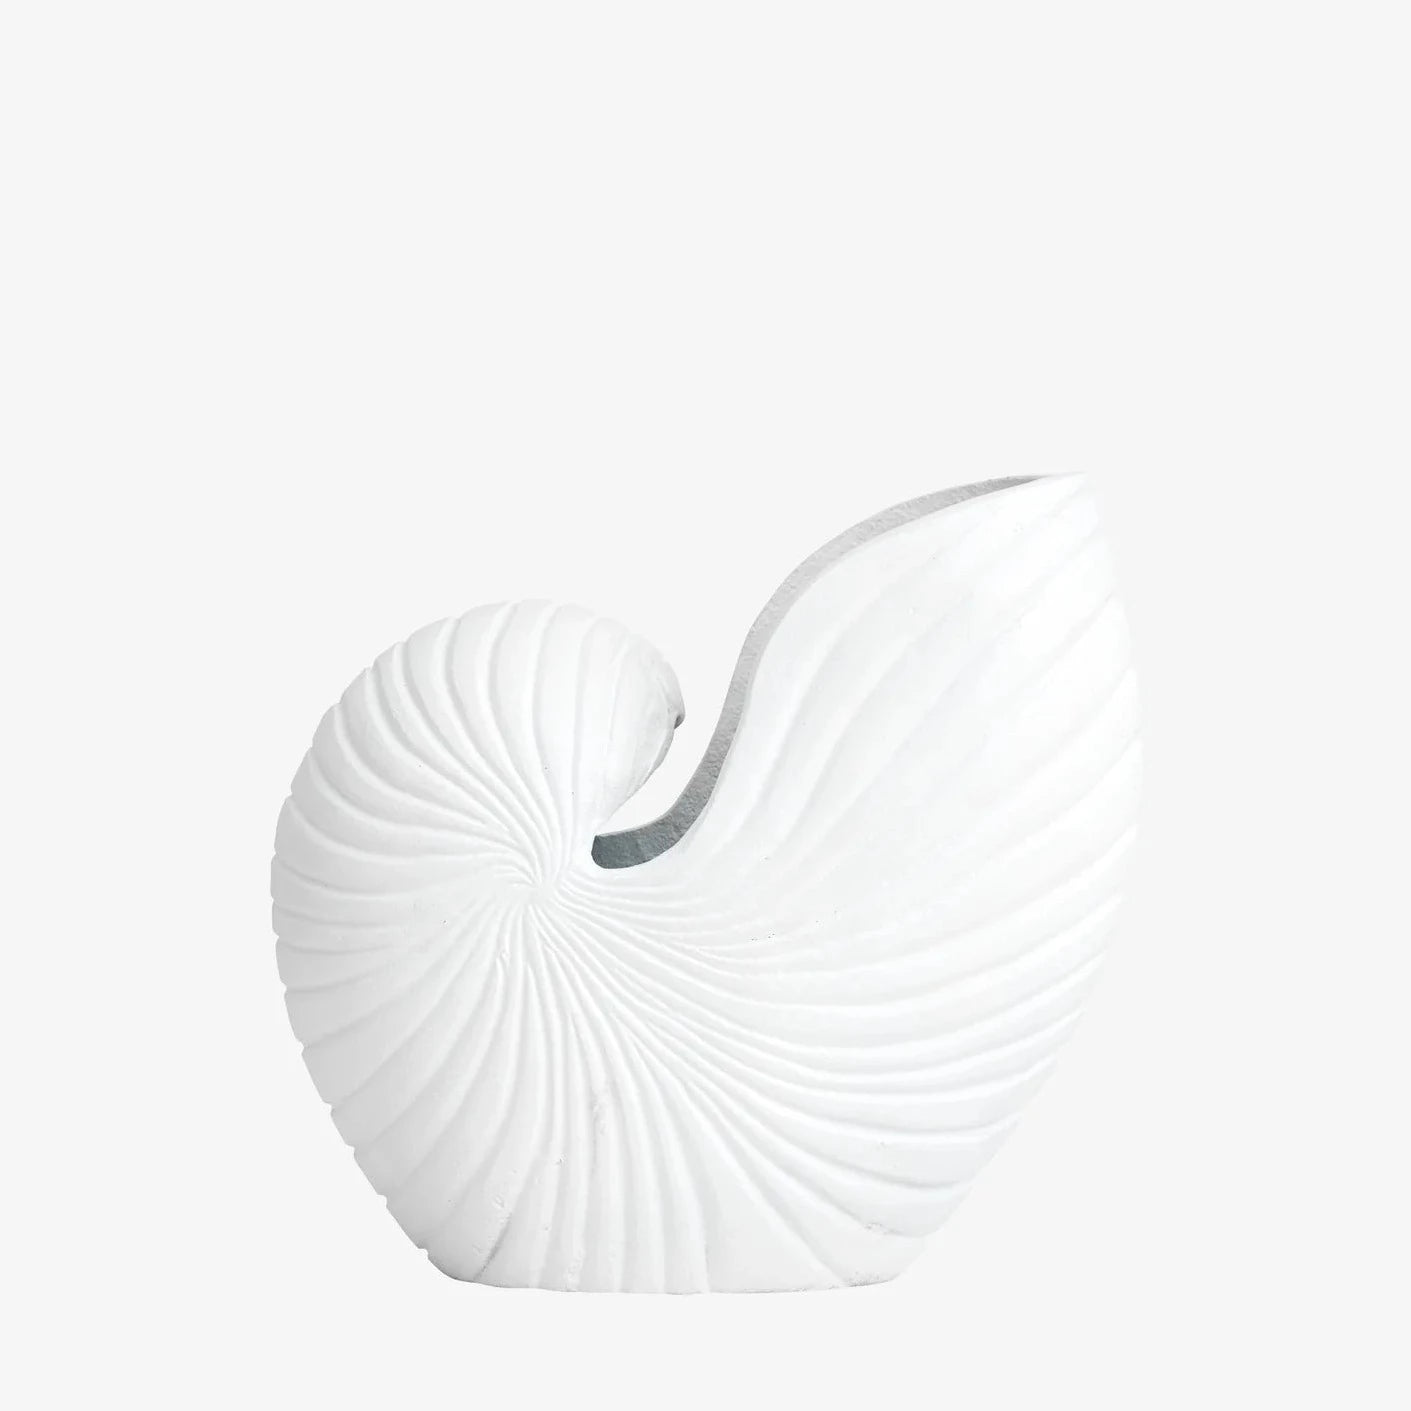 Shell White Vase